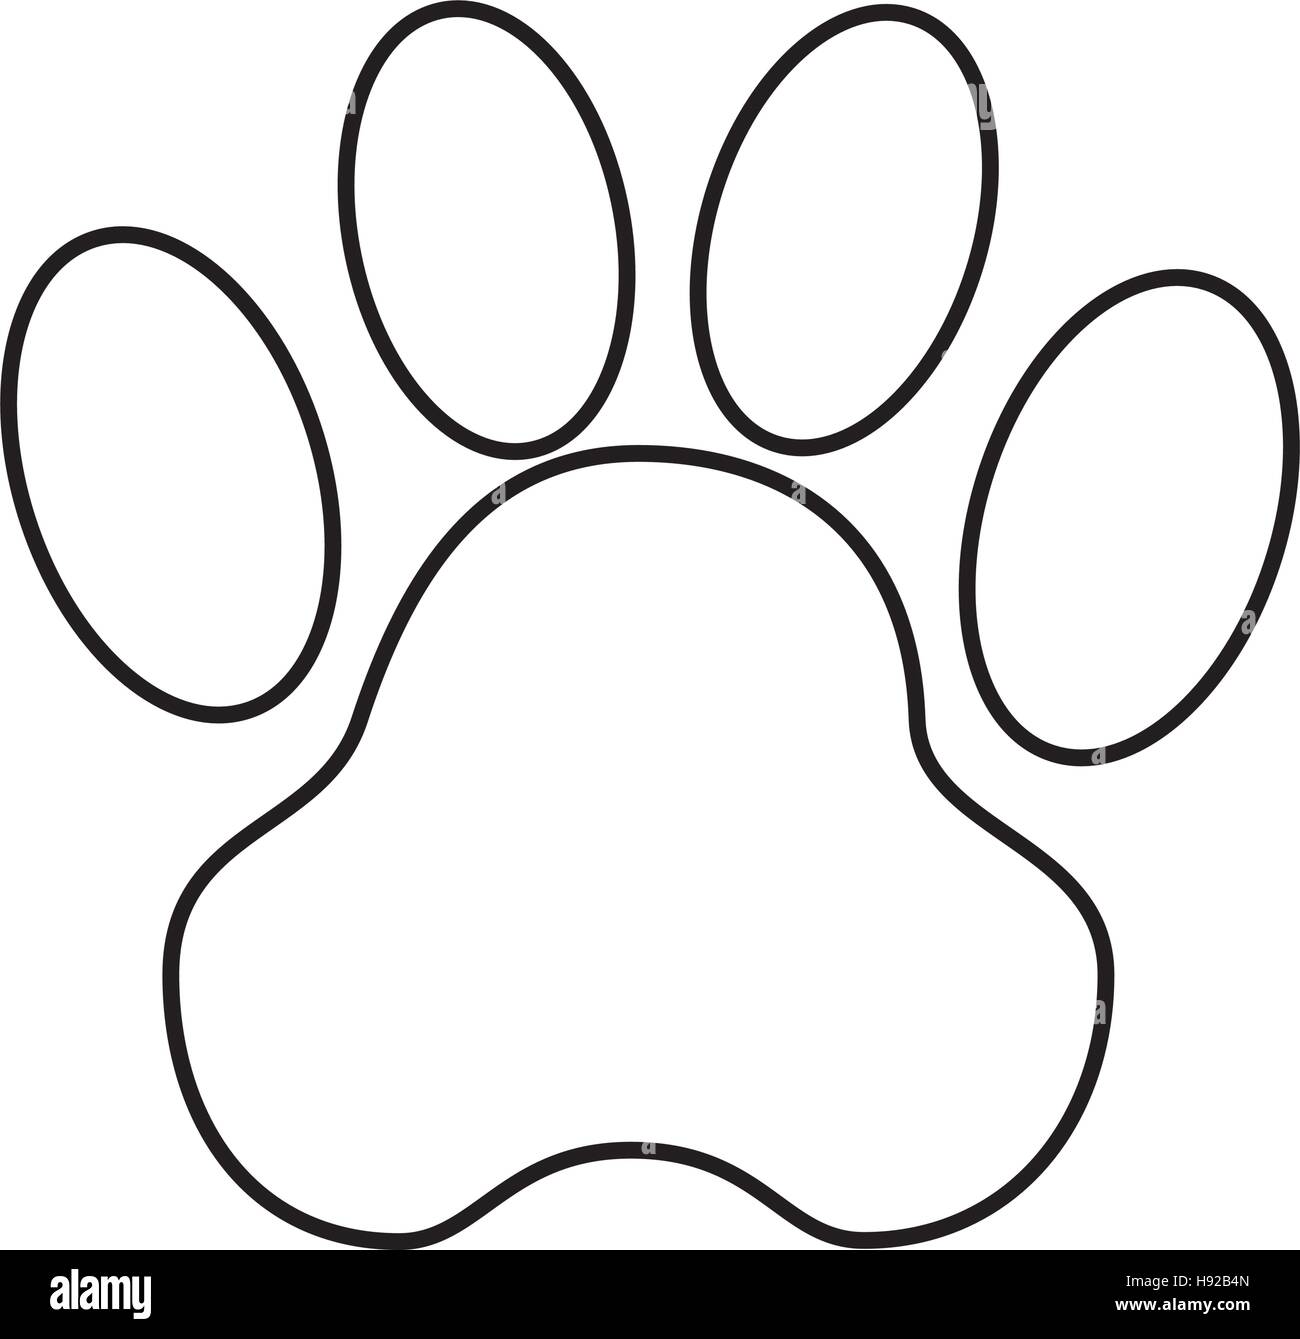 seal with animal footprint vector illustration design Stock Vector ...